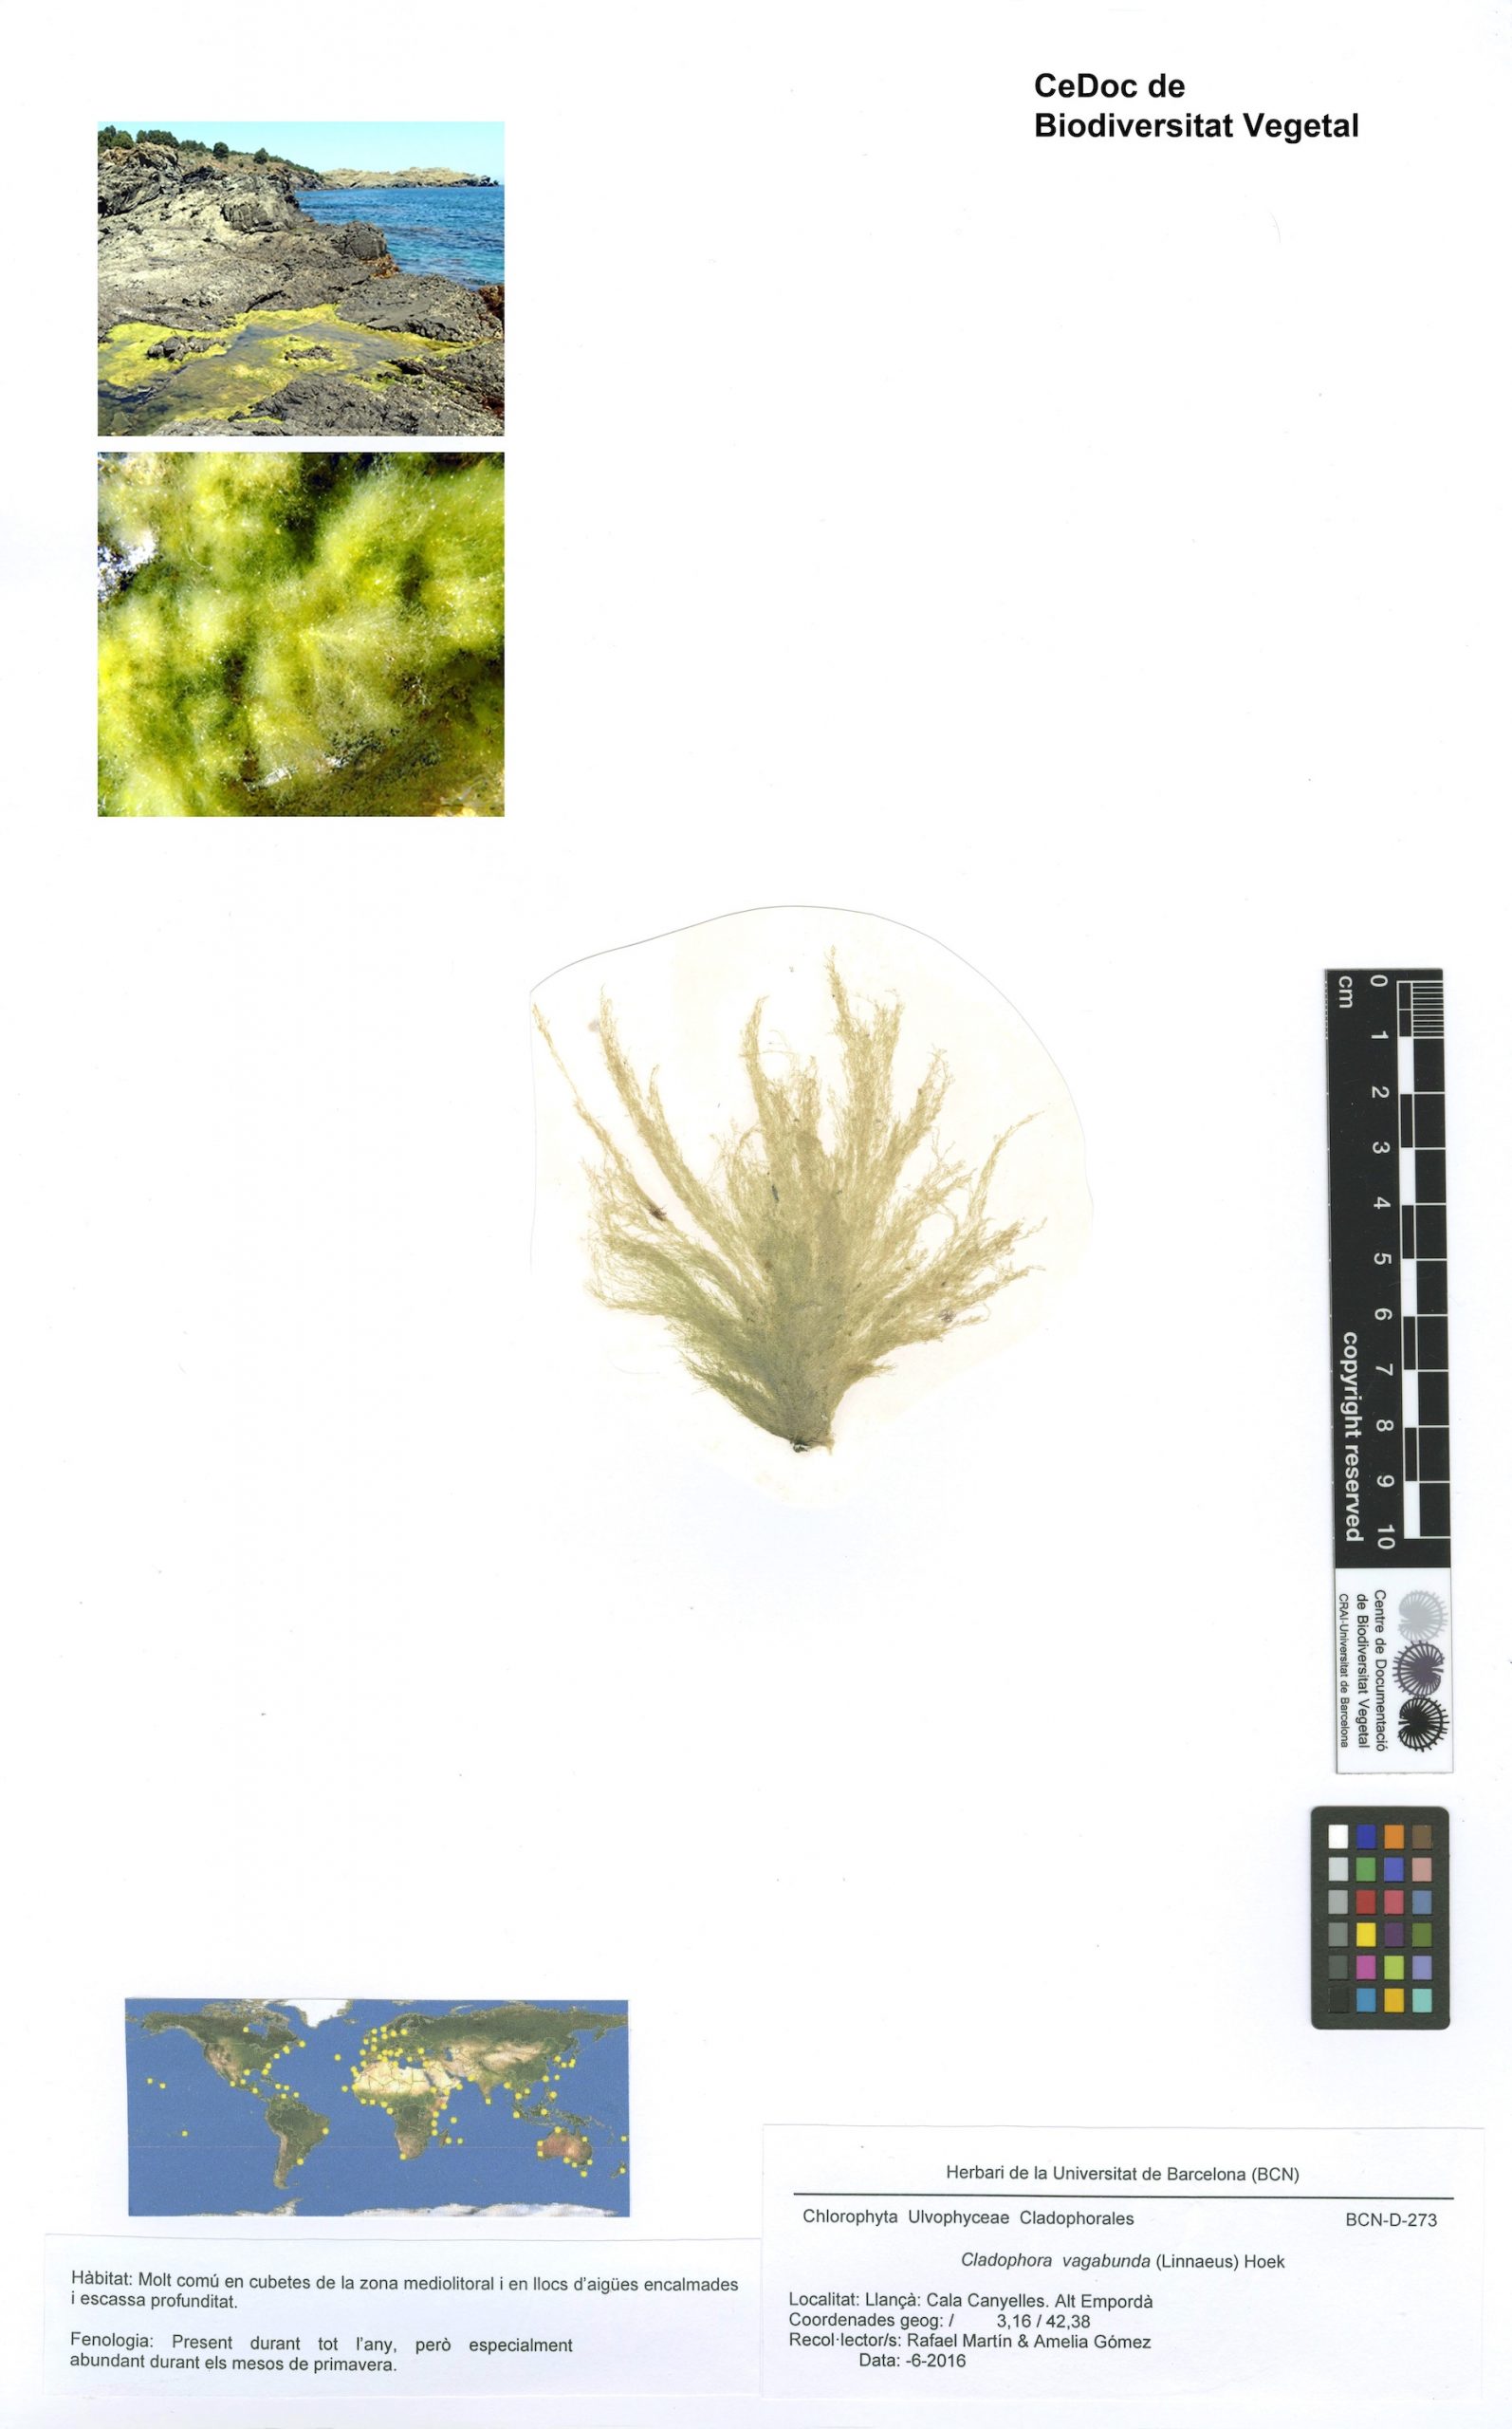 Cladophora vagabunda (Linnaeus) Hoek